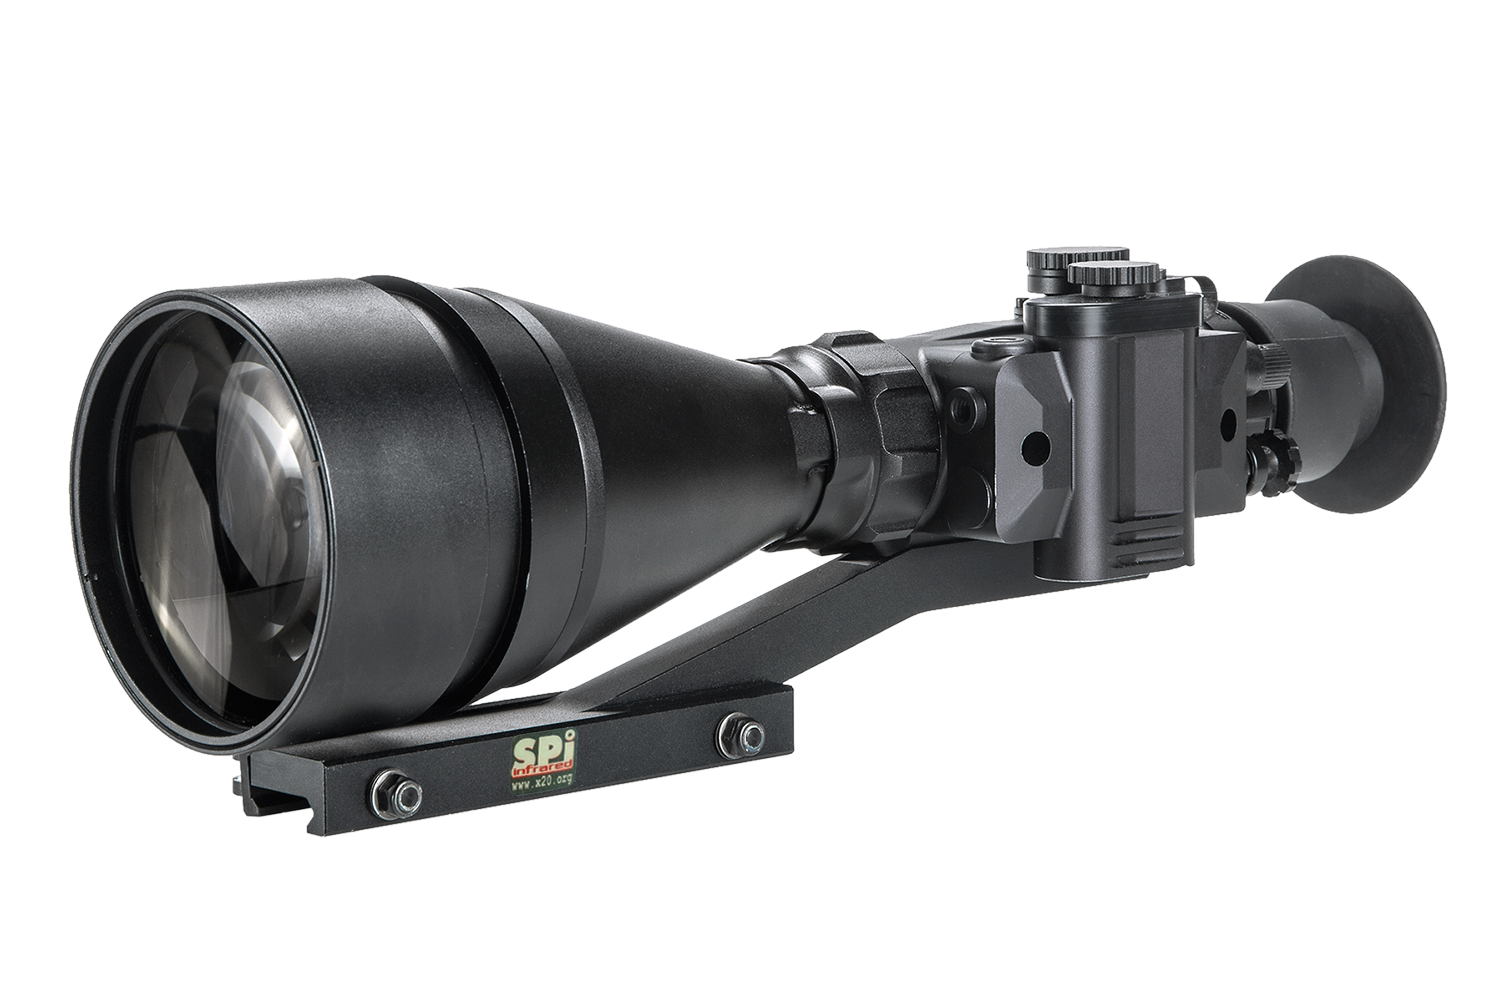 Thermal gun rifle scope optics range military hunting night or day